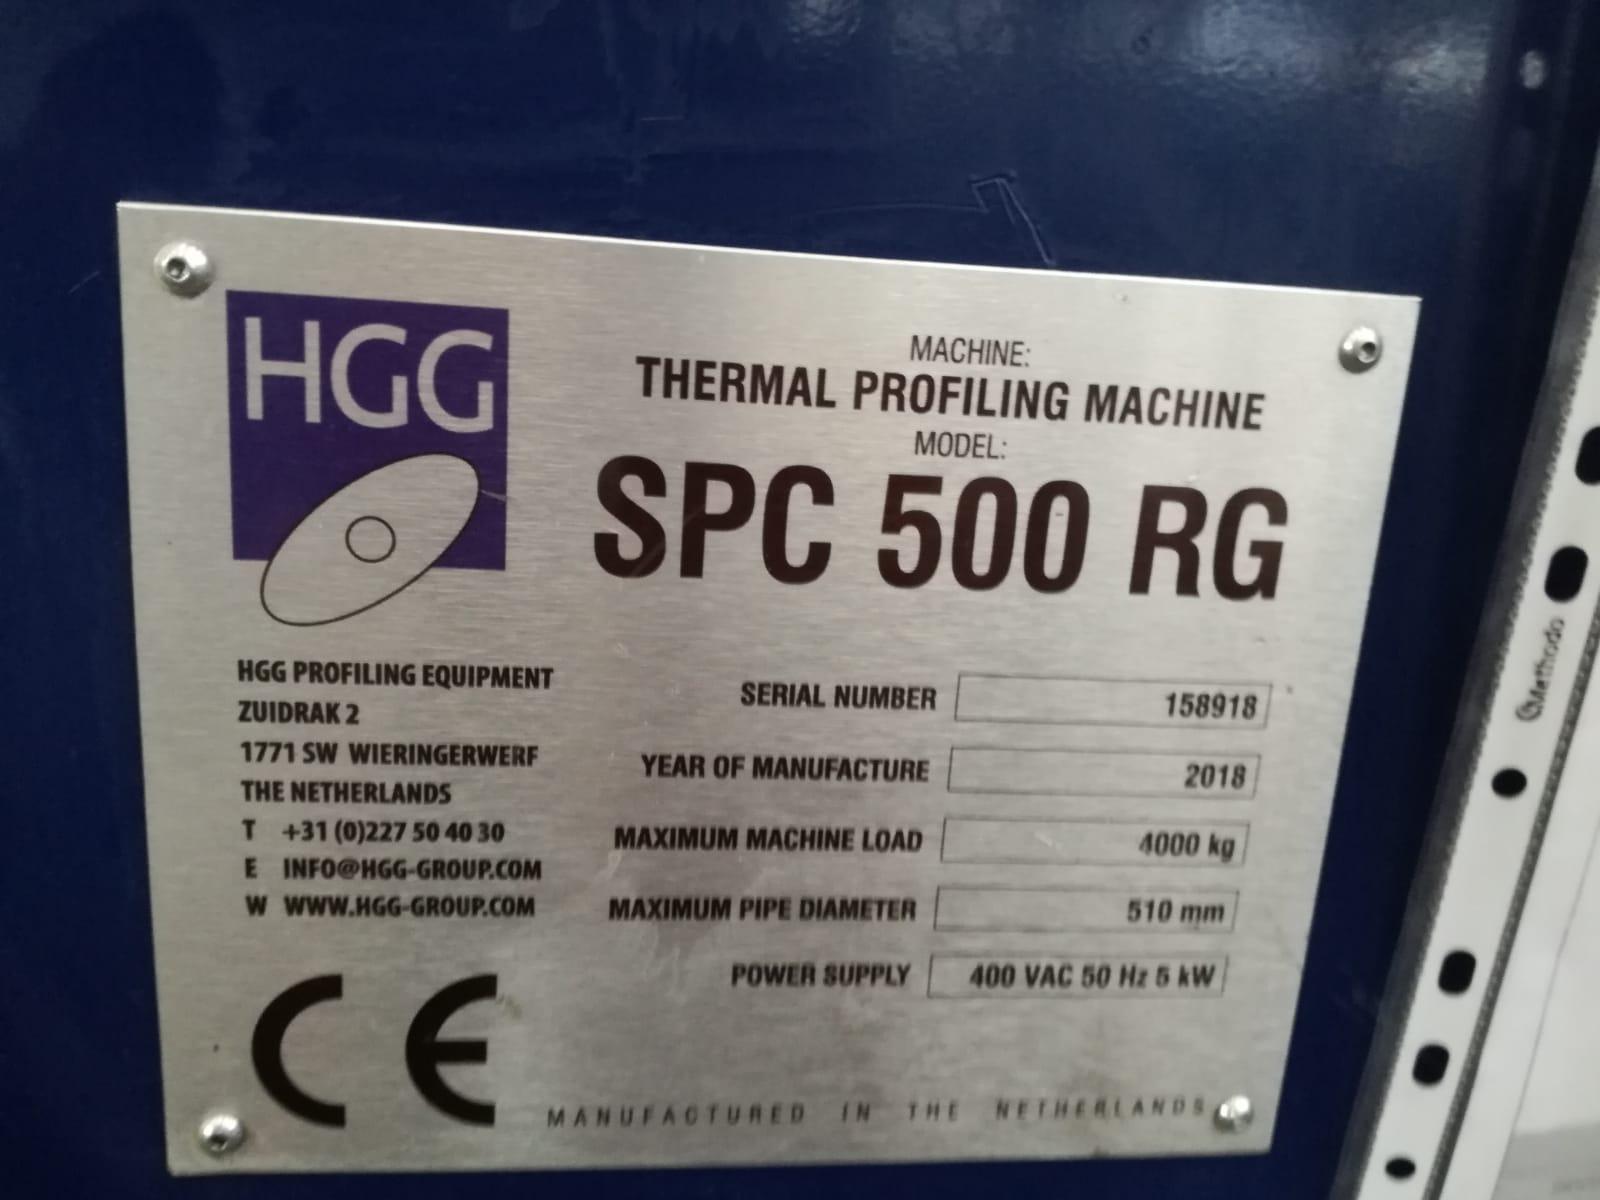 Macchina per taglio a mezzo plasma CN di tubi  a spessore HGG mod SPC 500